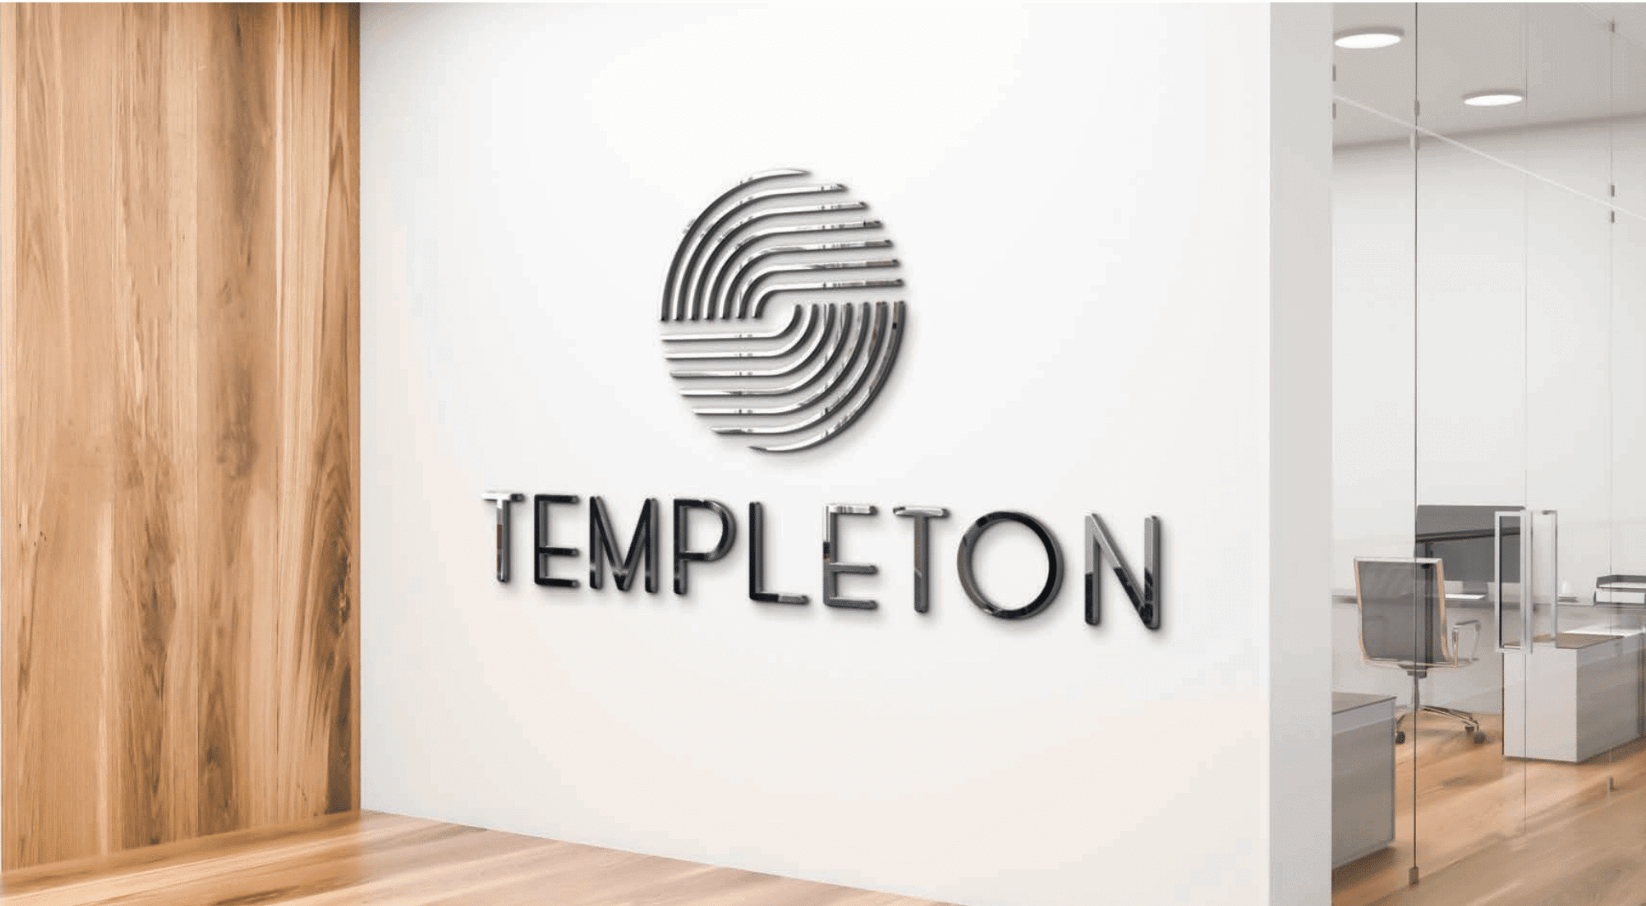 https://alinemedeiros.com/wp-content/uploads/2021/02/templeton-logo-aplication.png